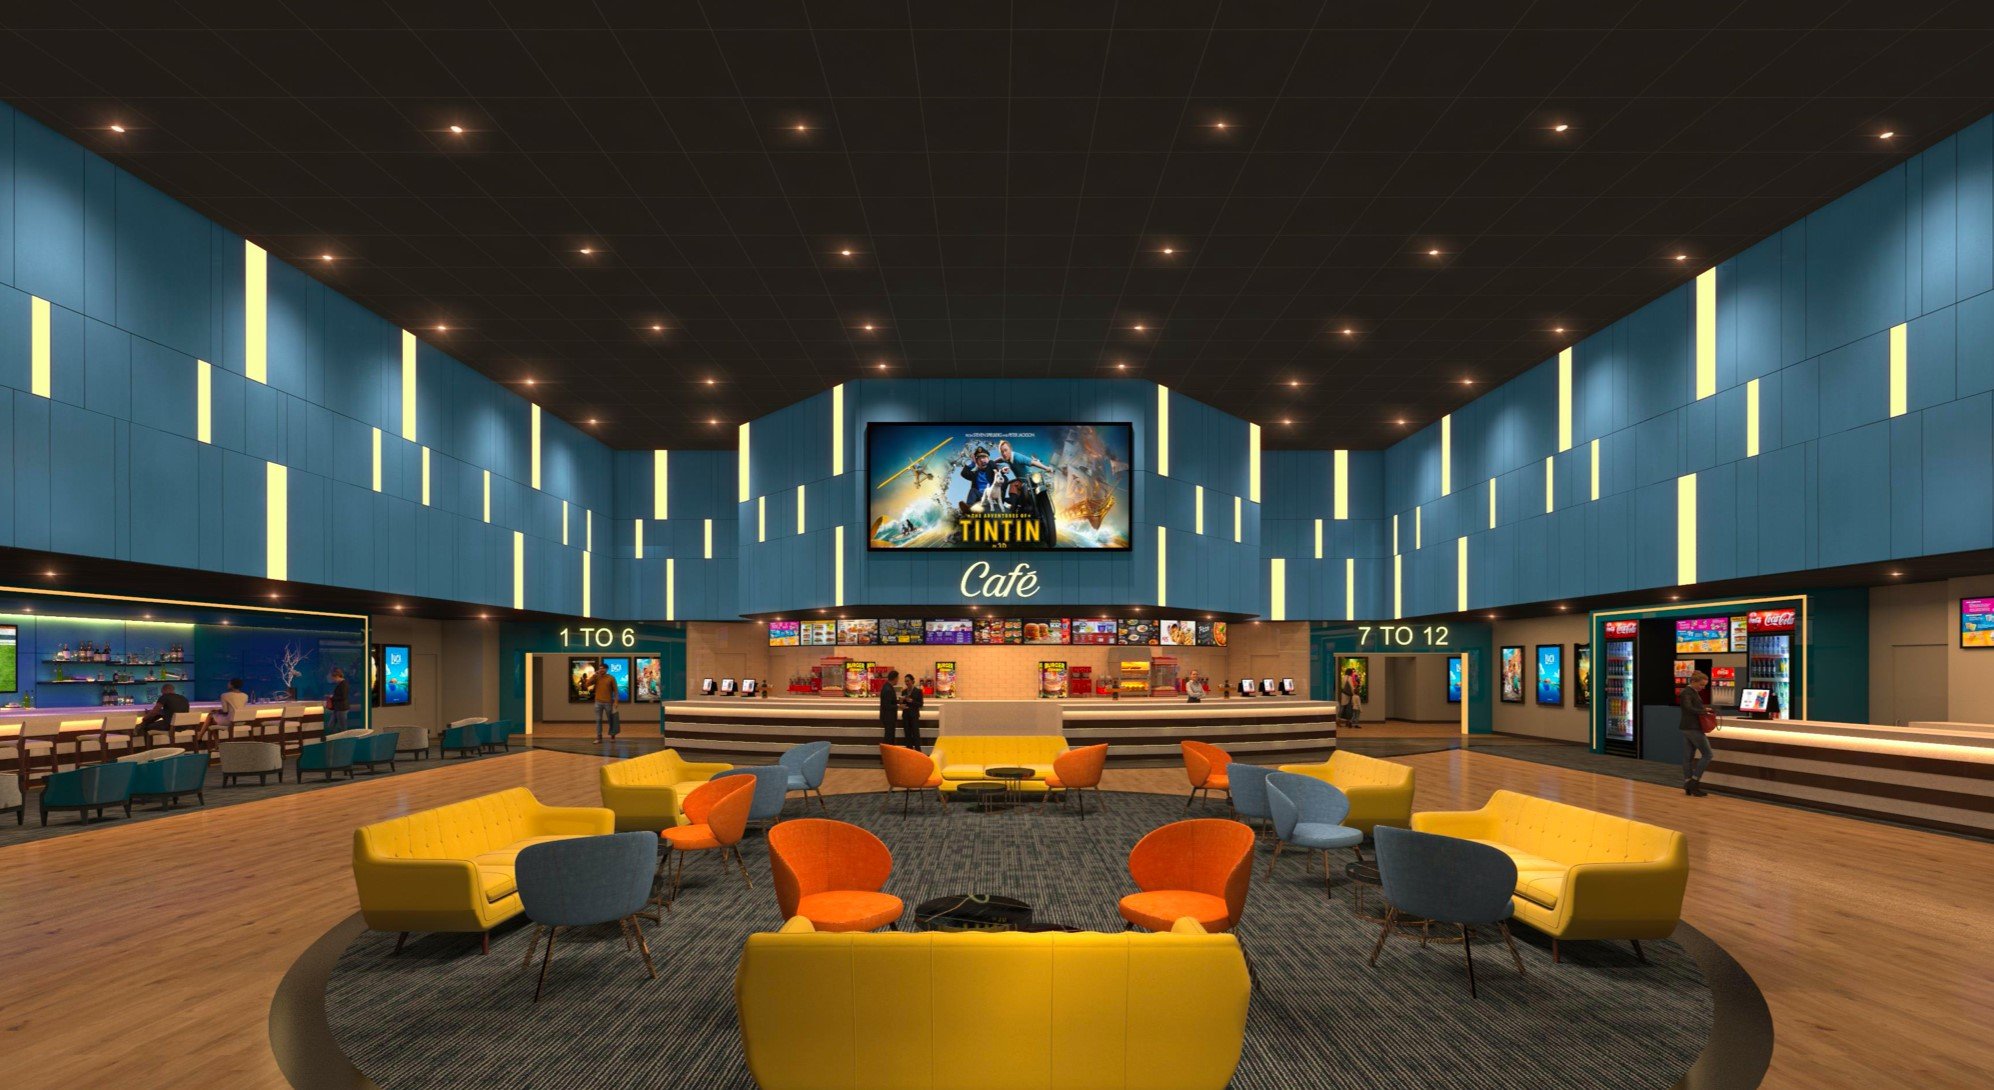 New Apple Cinemas replacing old Showcase at Warwick Mall ABC6